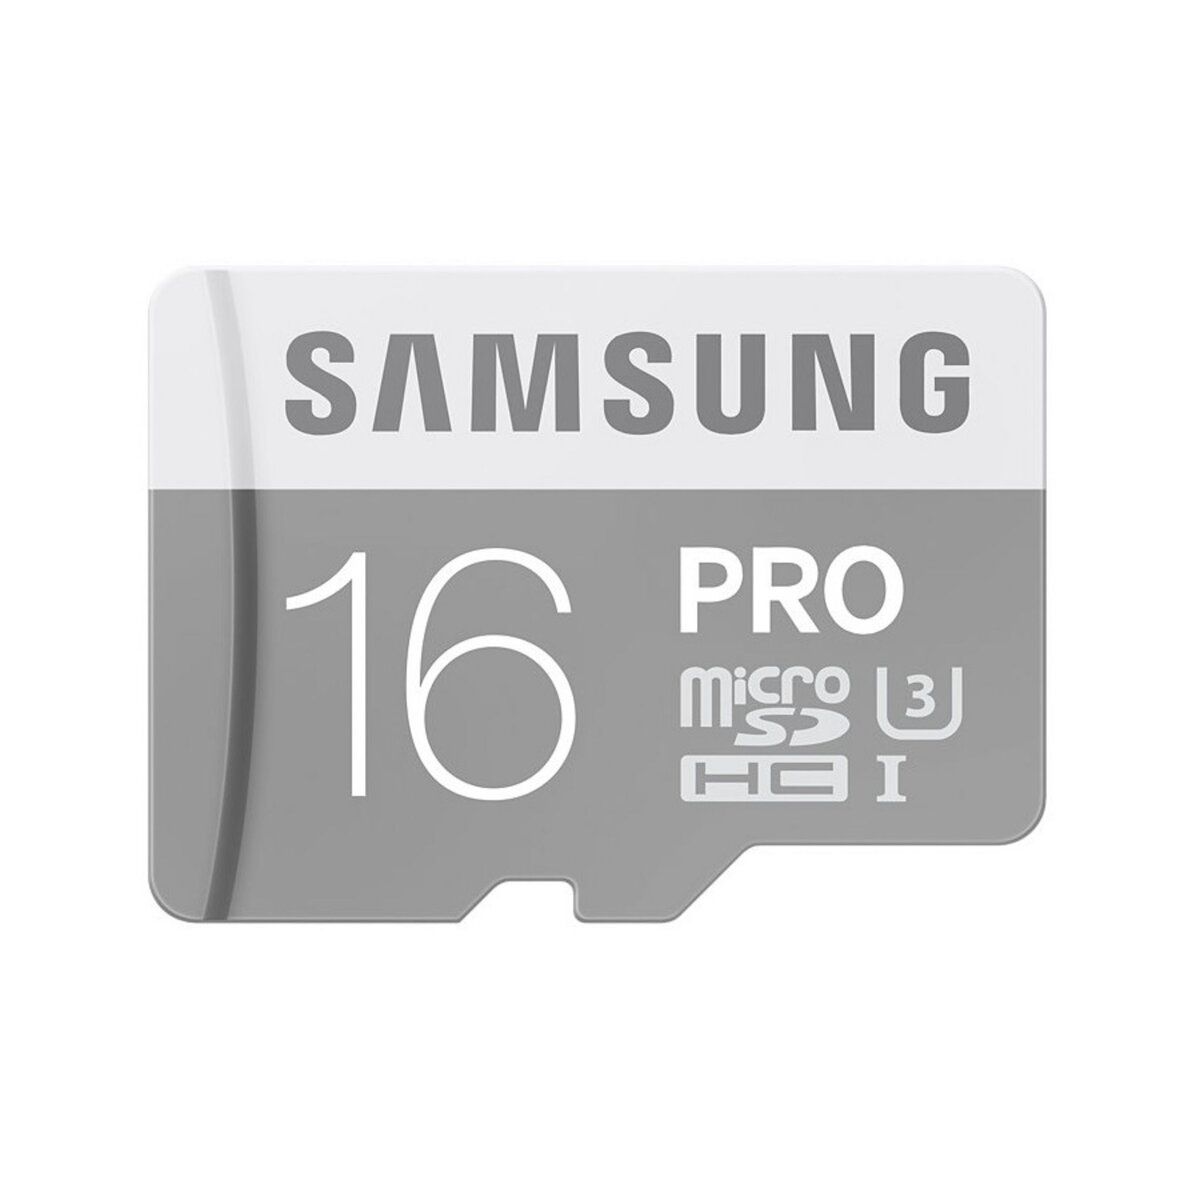 SAMSUNG Micro SDHC 16 Go Pro + Adaptateur - Carte mémoire